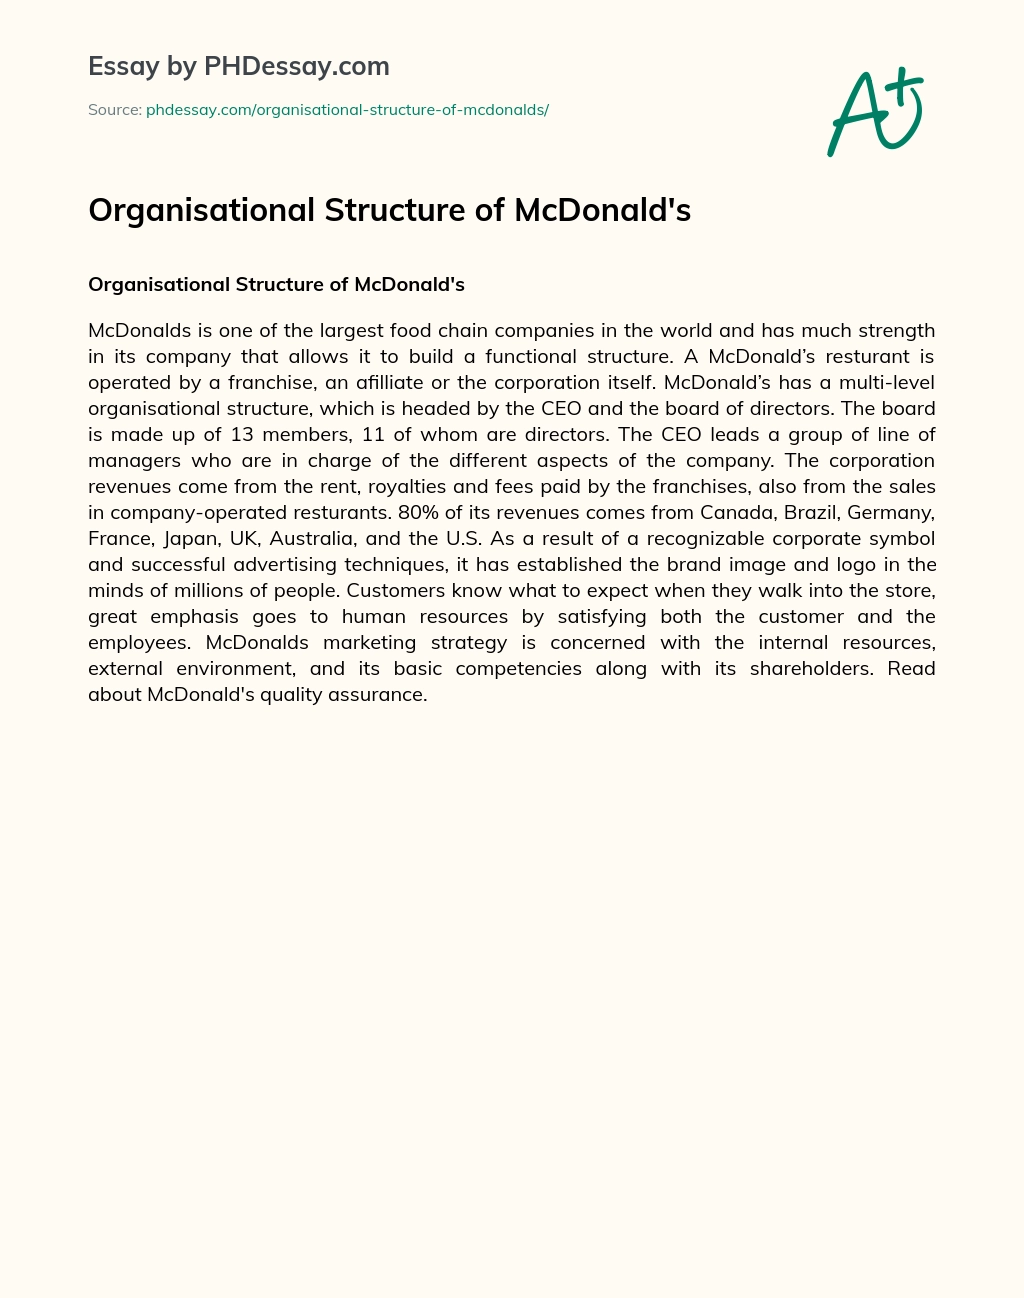 Organisational Structure of McDonald’s essay